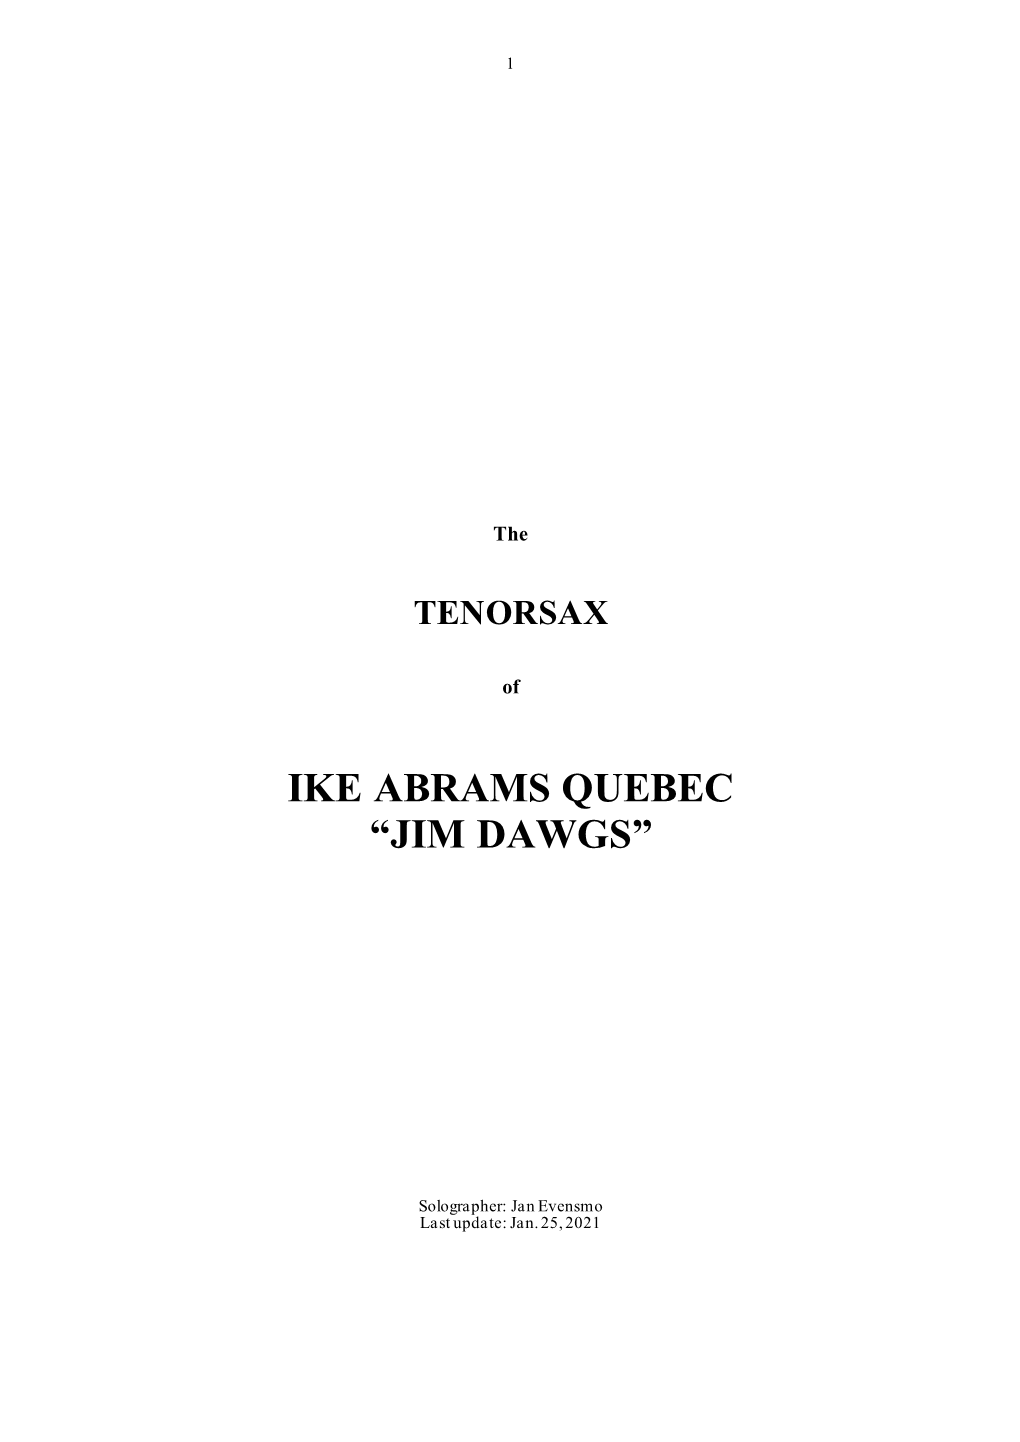 Ike Abrams Quebec “Jim Dawgs”